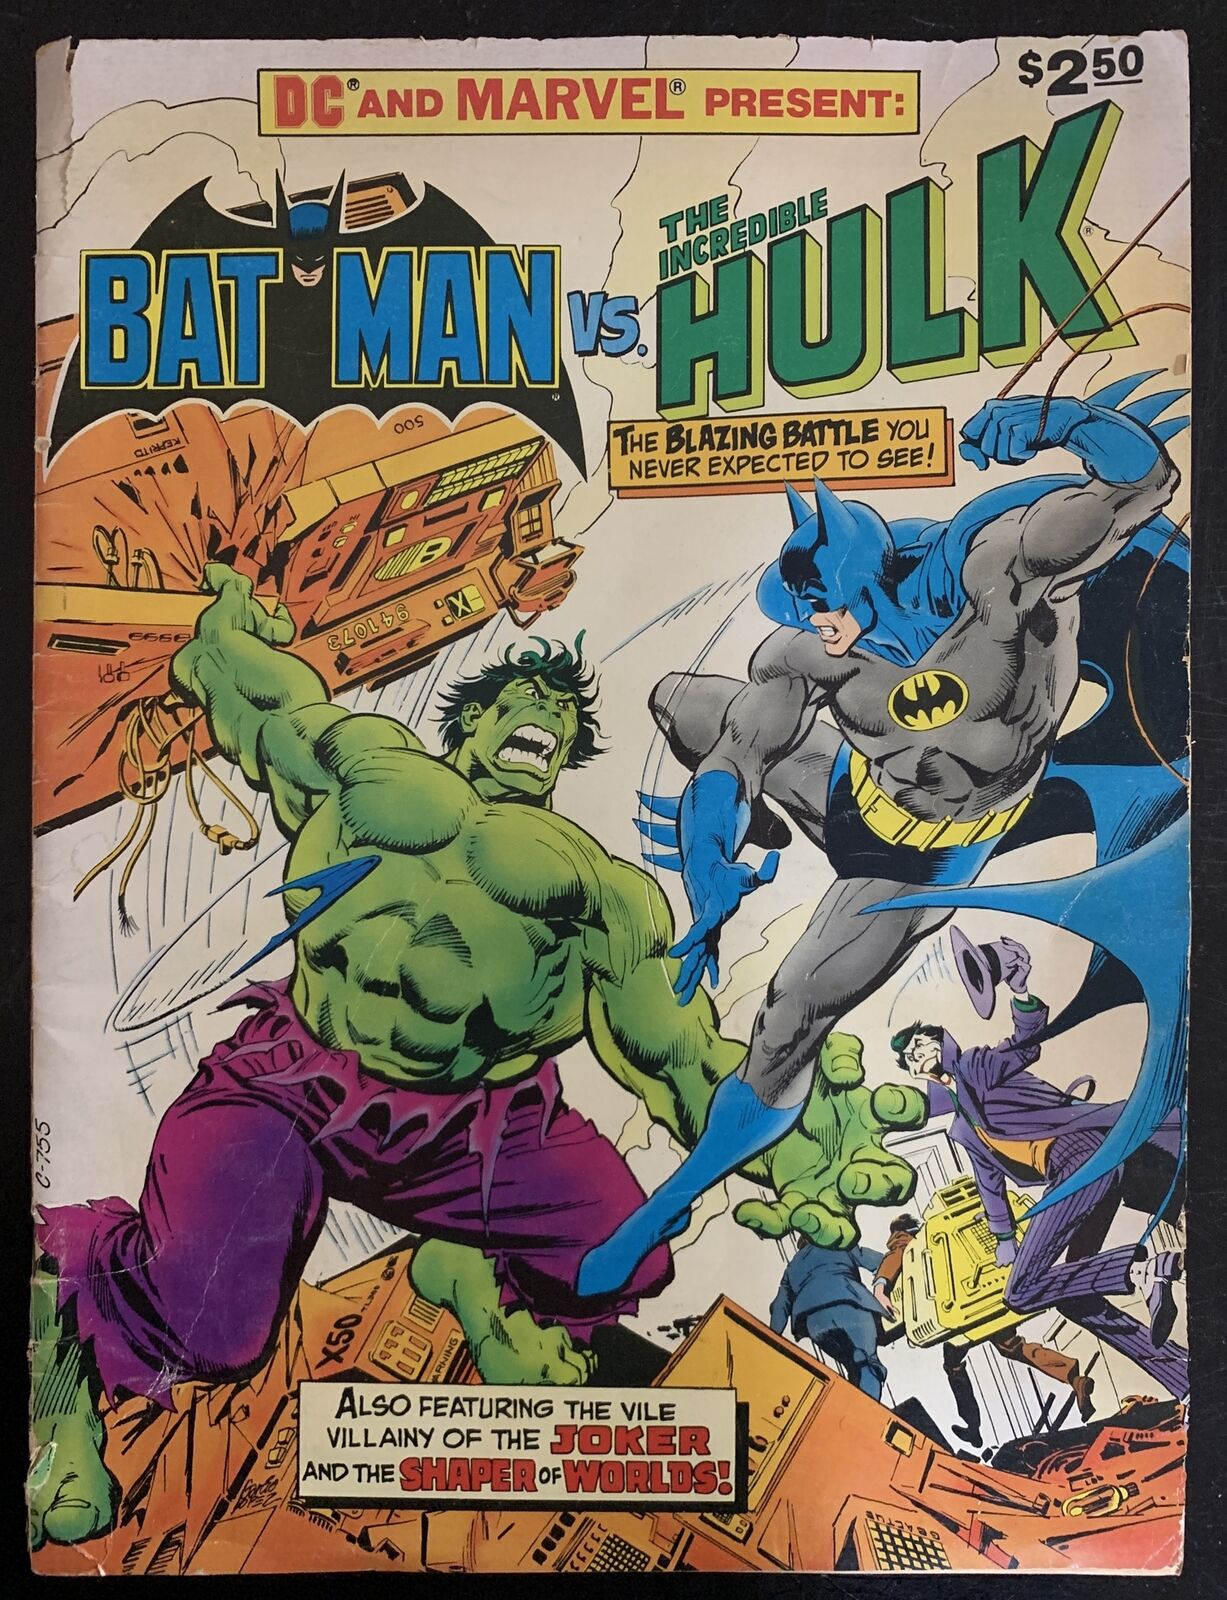 DC AND MARVEL PRESENT: BATMAN VS. THE INCREDIBLE HULK